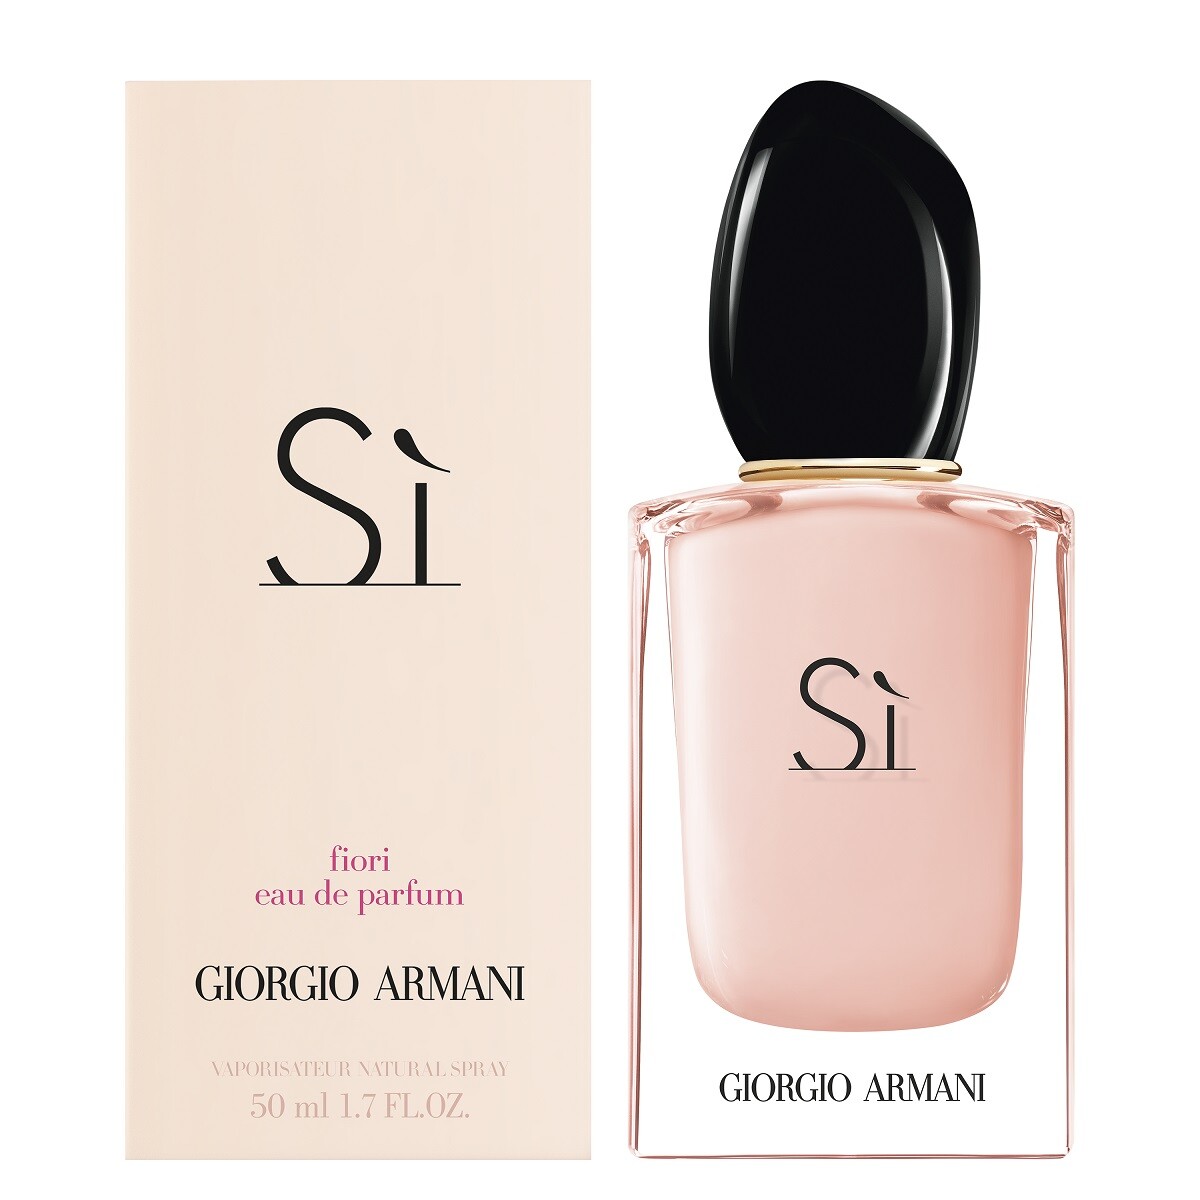 Perfume Si Fiori Giorgio Armani Edp 50 Ml. 